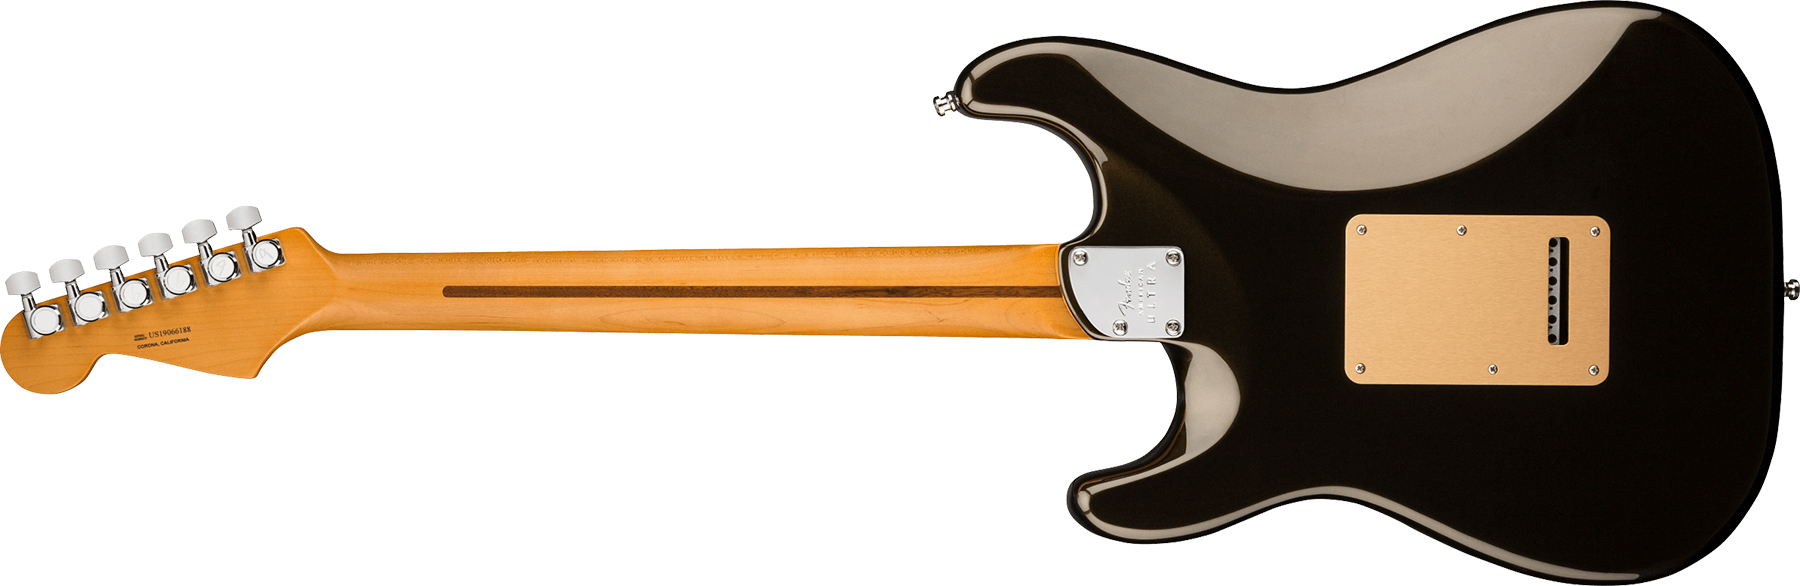 Fender Strat American Ultra 2019 Usa Mn - Texas Tea - Guitare Électrique Forme Str - Variation 1